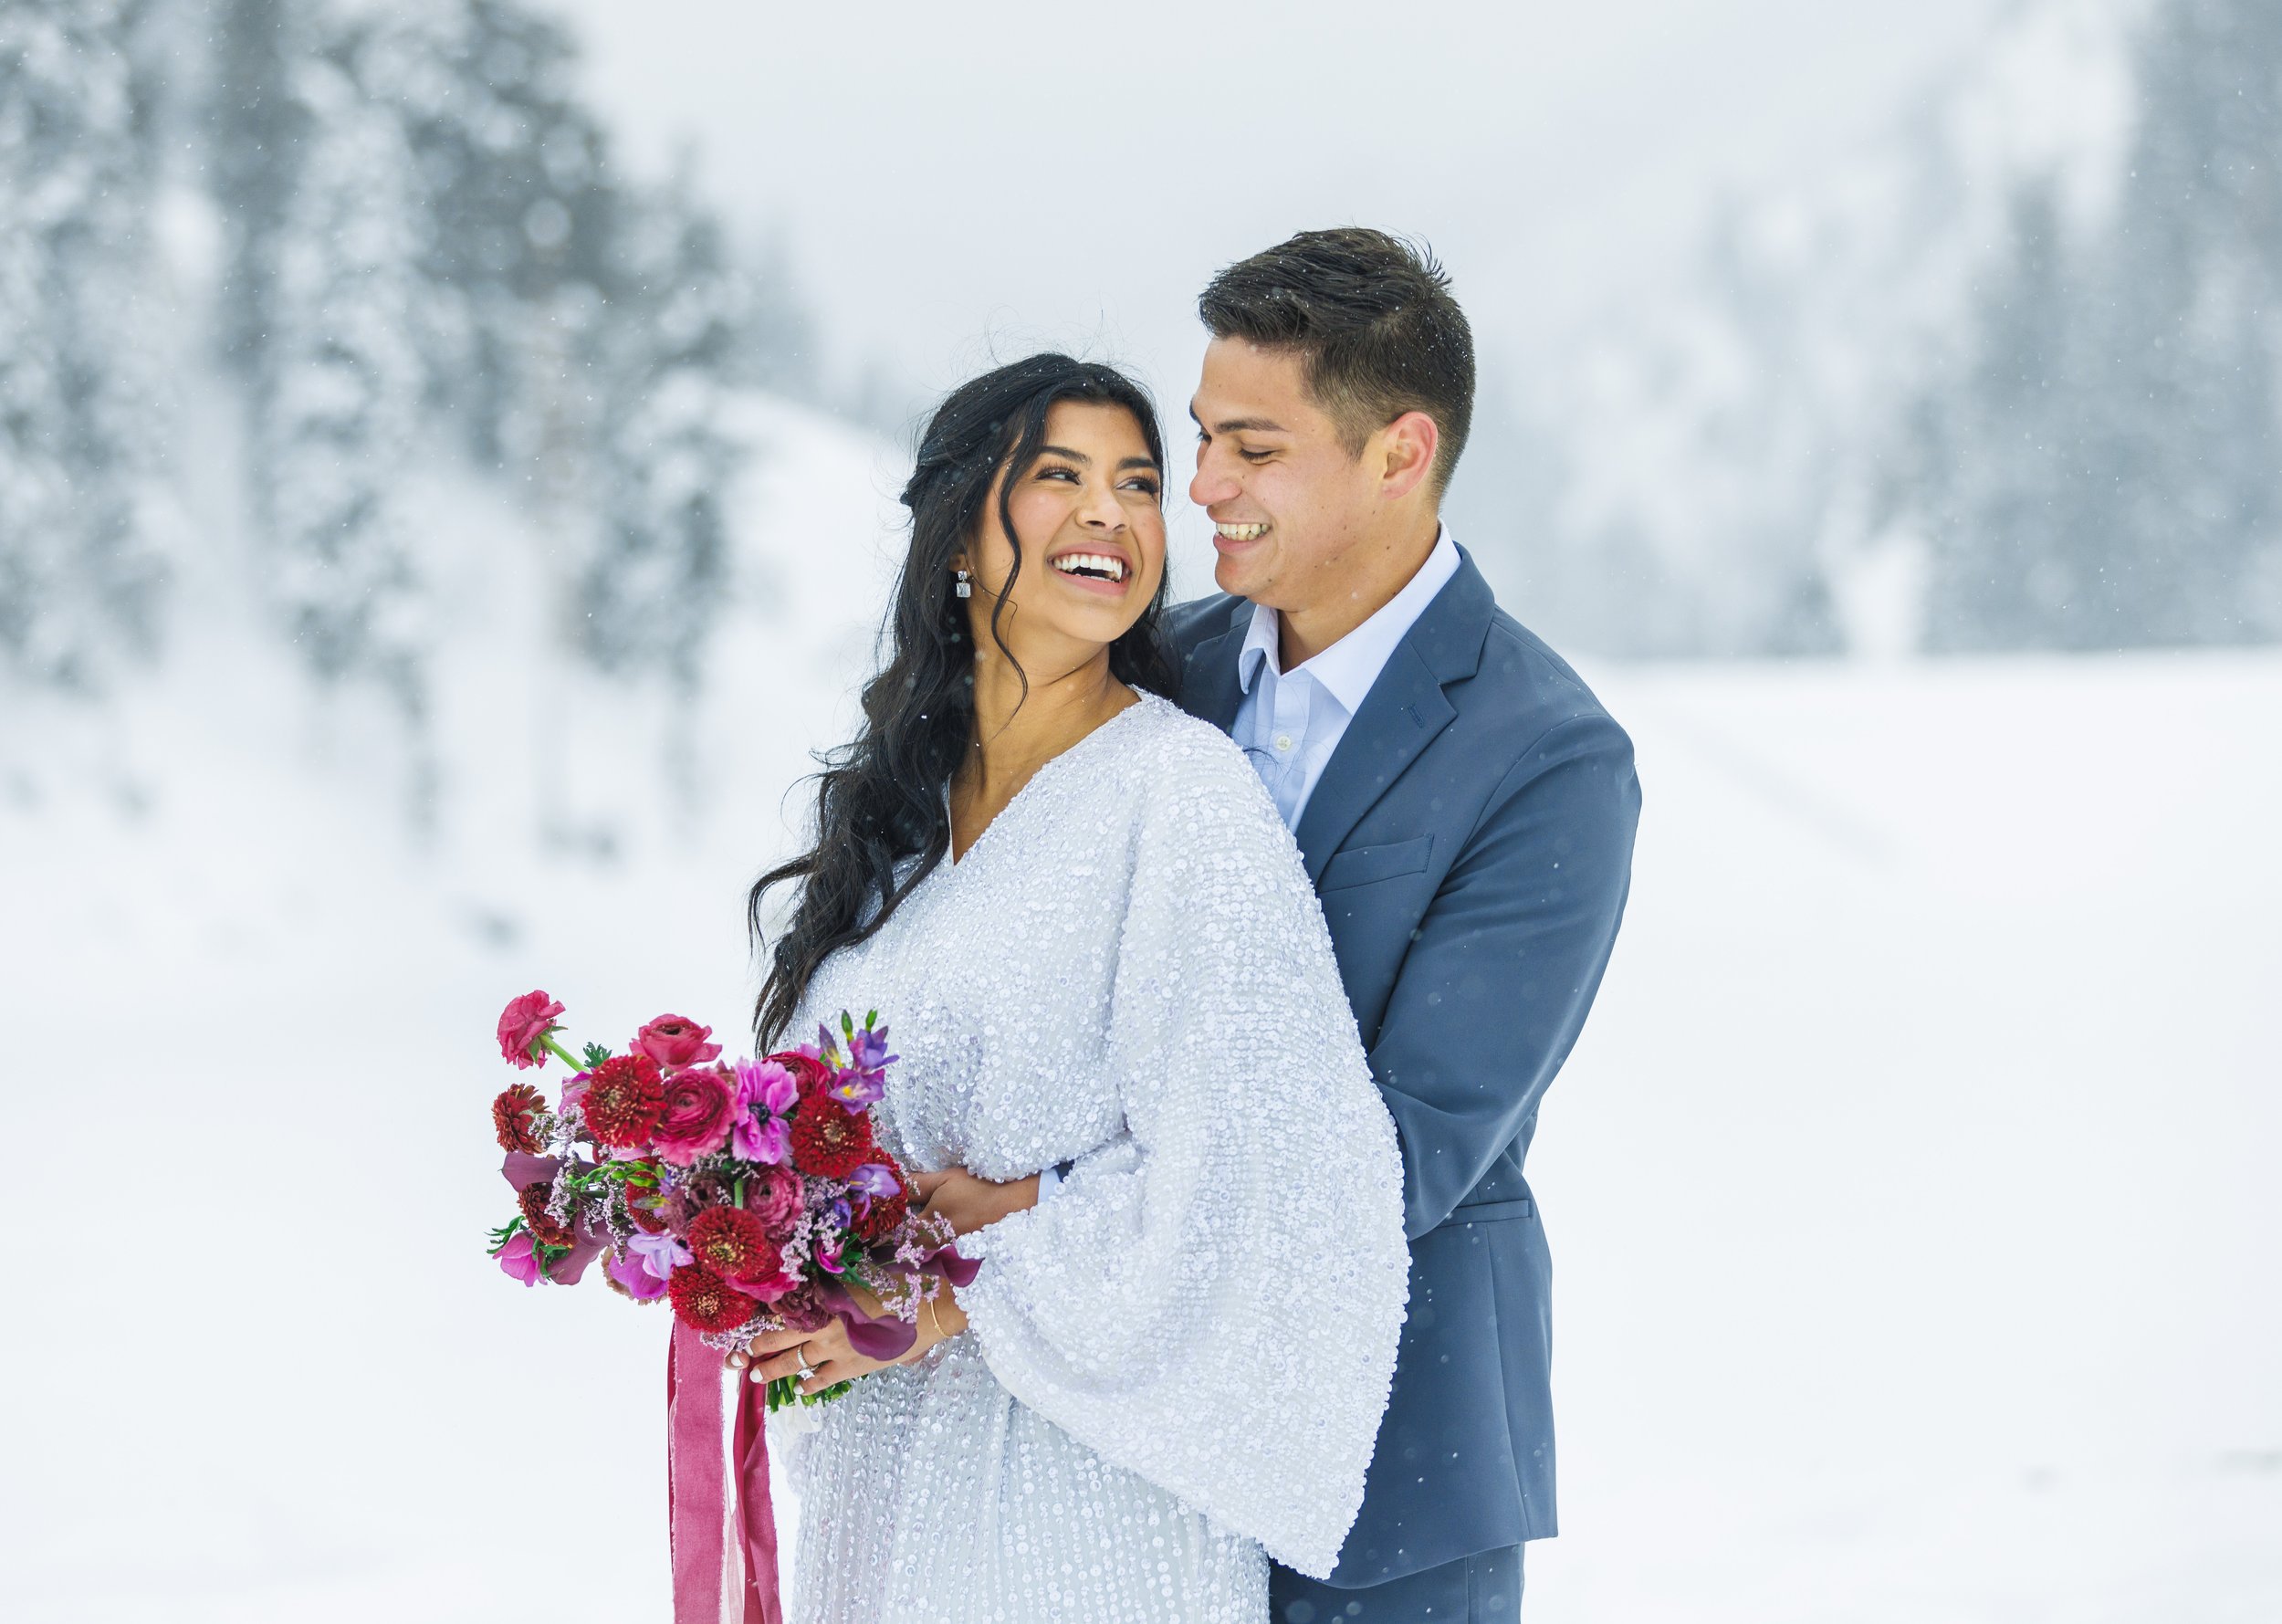  Wedding photographer captures Winter Mountain Bridals at Tibble Fork by Savanna Richardson Photography. bridal winter #SavannaRichardsonPhotography #SavannaRichardsonBridals #WinterBridals #WinterWedding #TibbleForkBridal #UtahBridal #MountainBridal